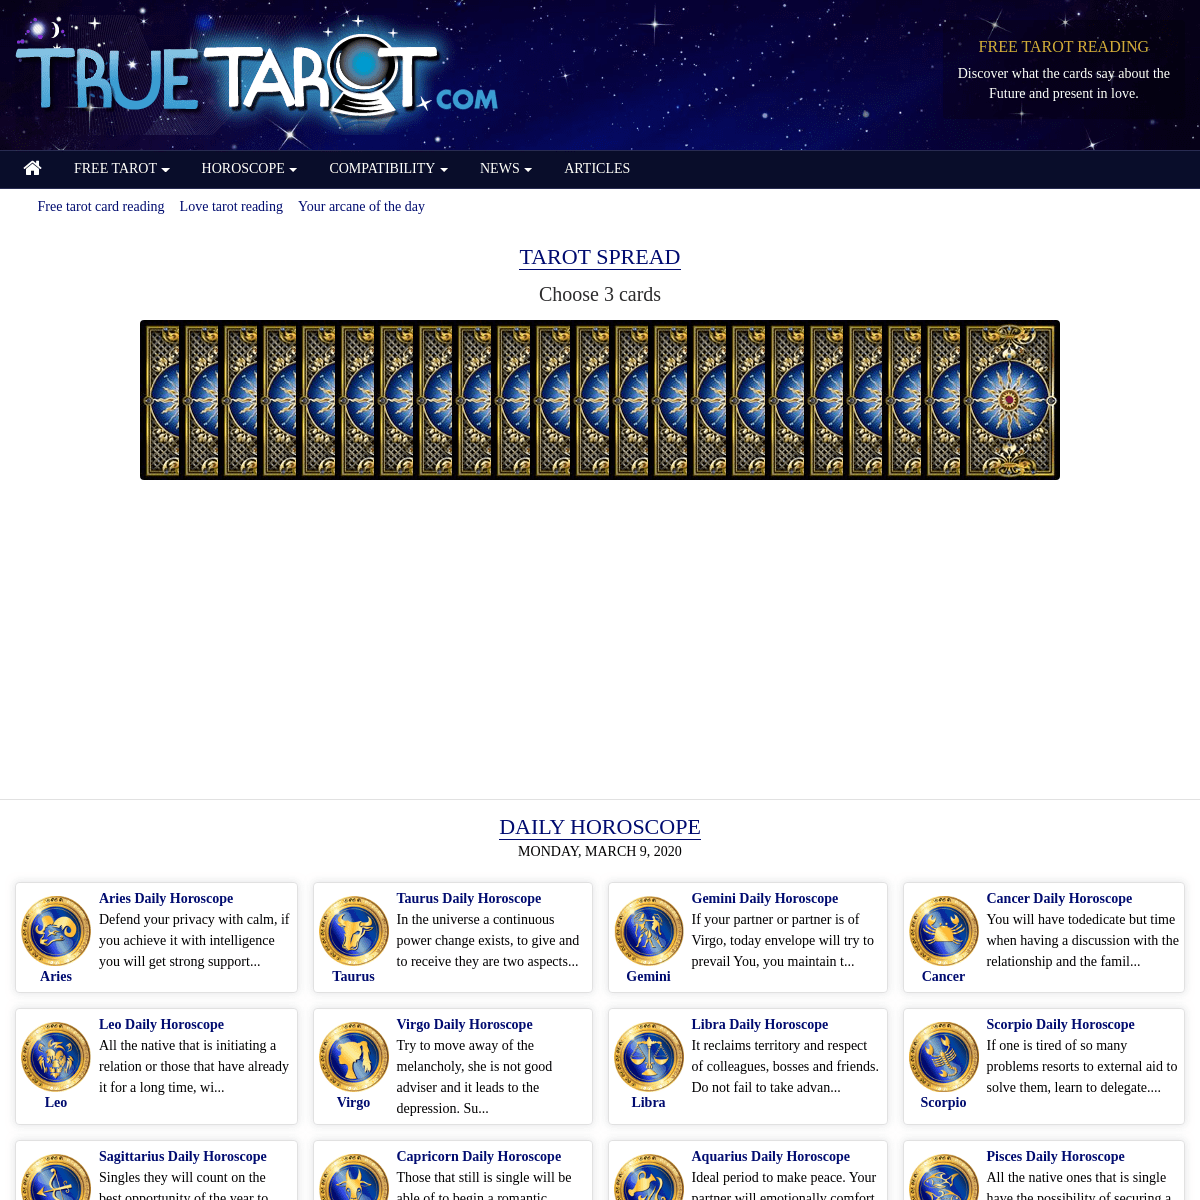 A complete backup of truetarot.com